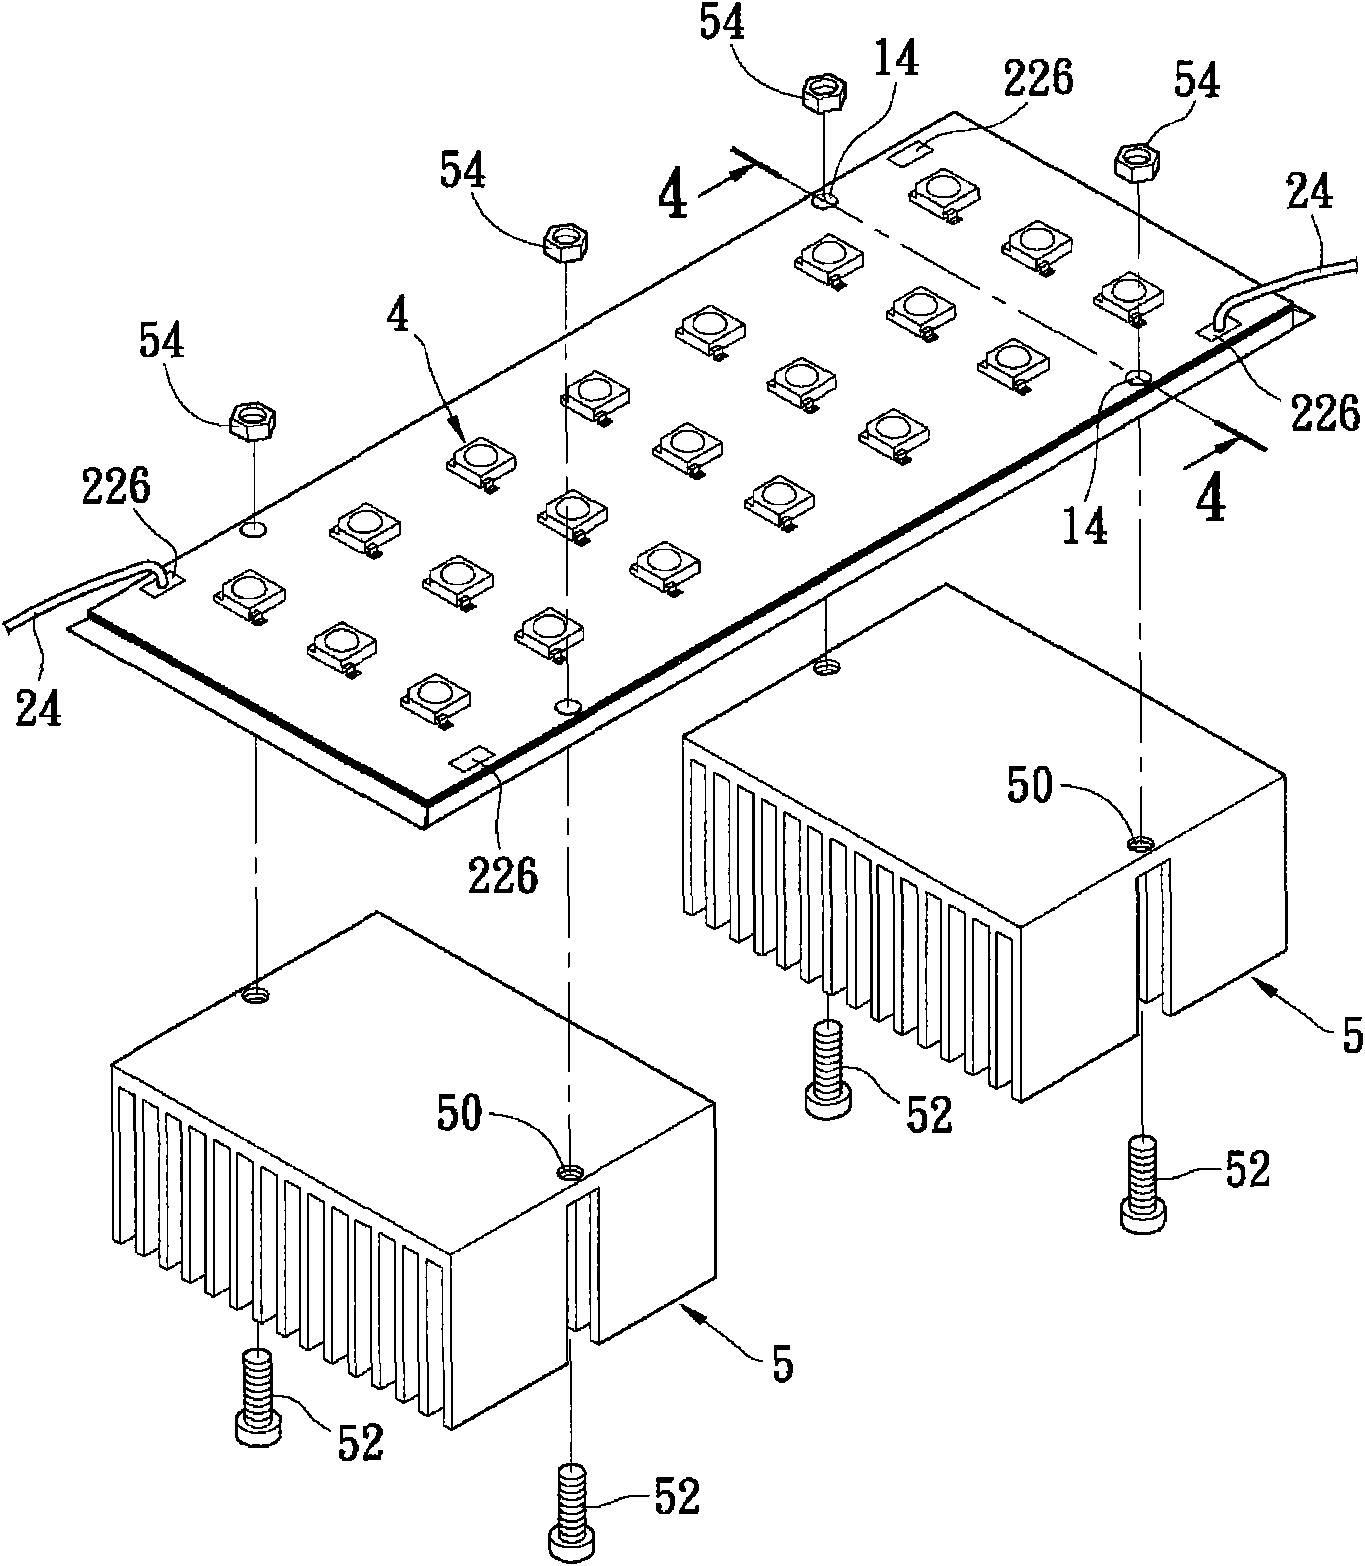 Method for manufacturing light-emitting diode lamp